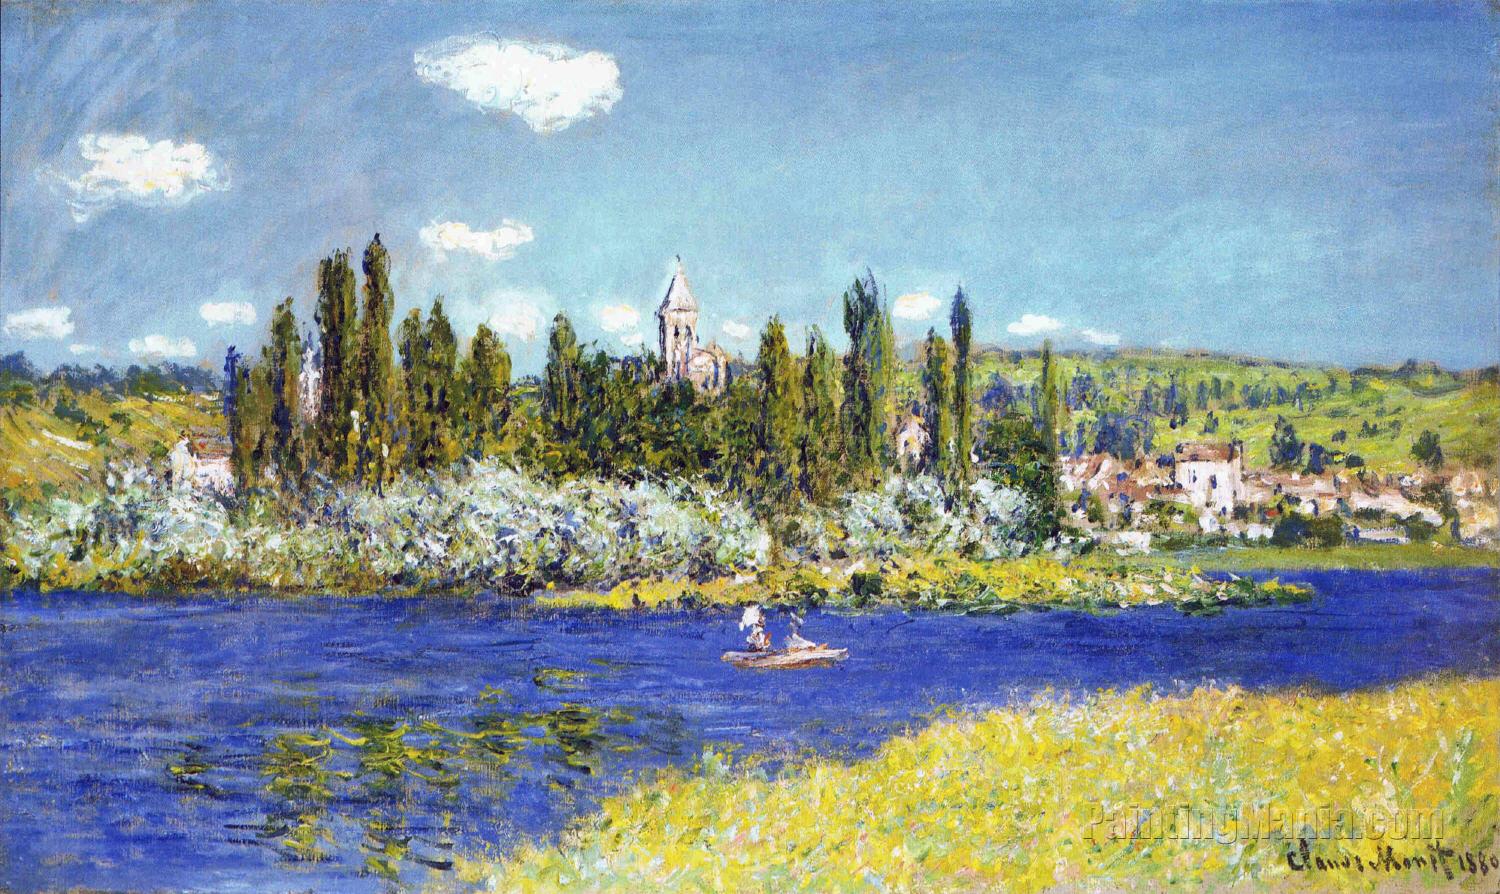 Claude+Monet-1840-1926 (946).jpg